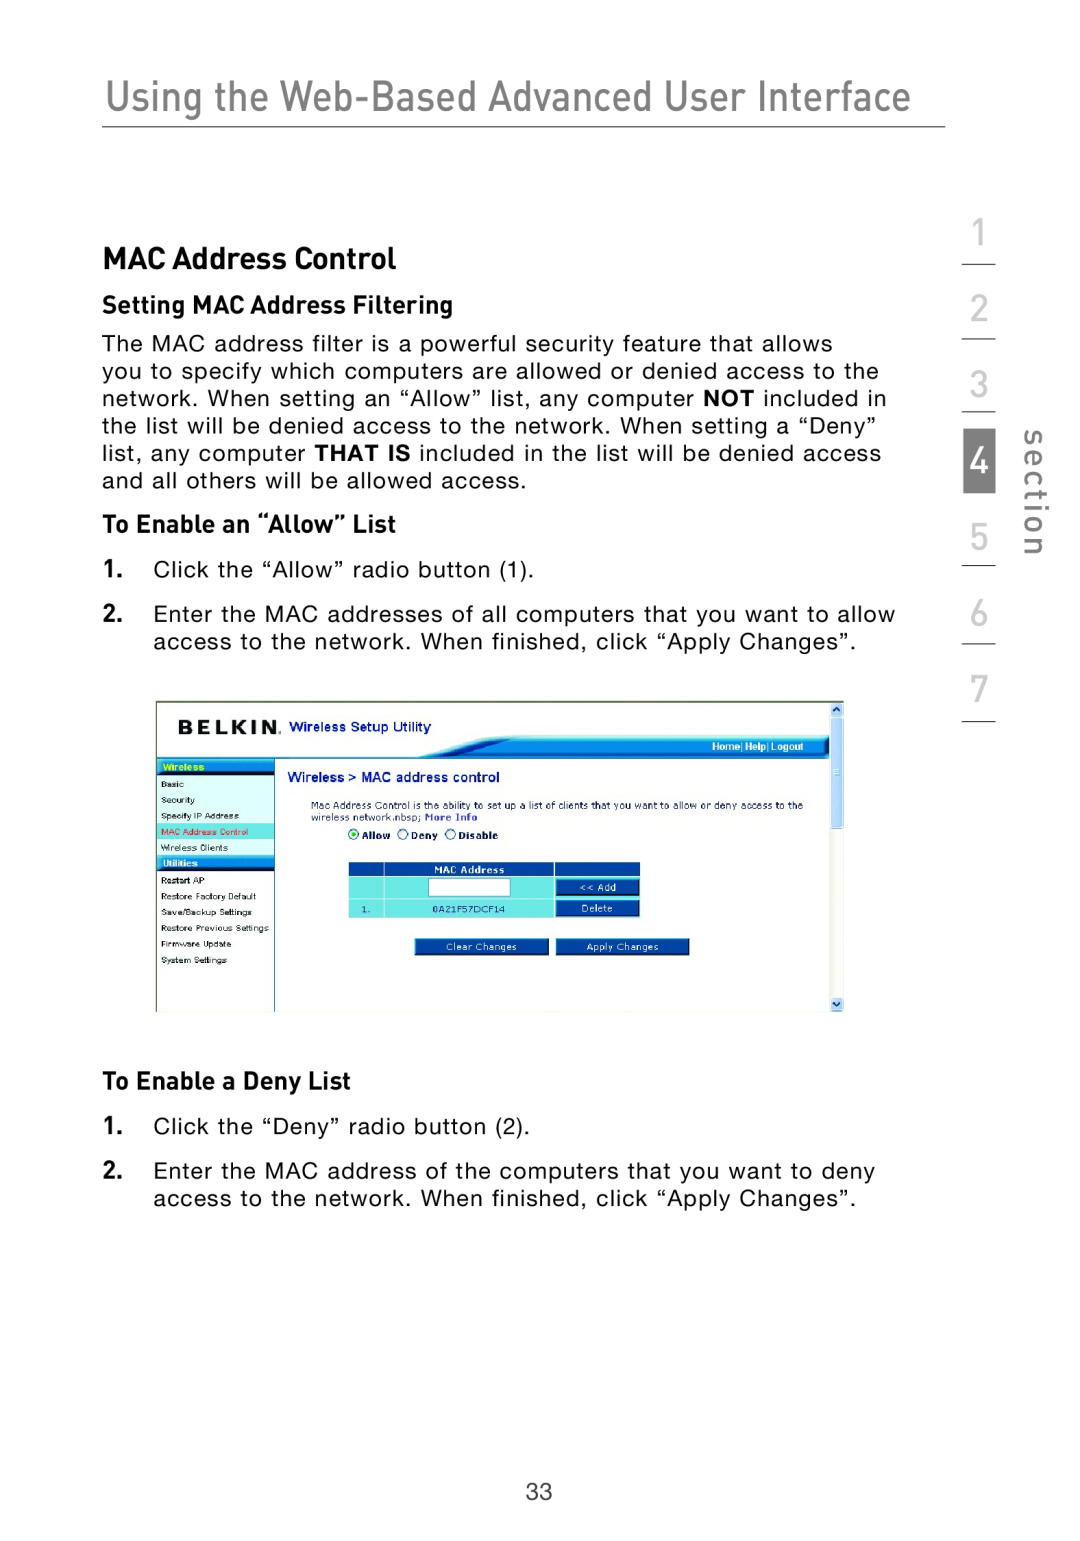 Belkin Range Extender/ Access Point MAC Address Control, Setting MAC Address Filtering, To Enable an “Allow” List, section 